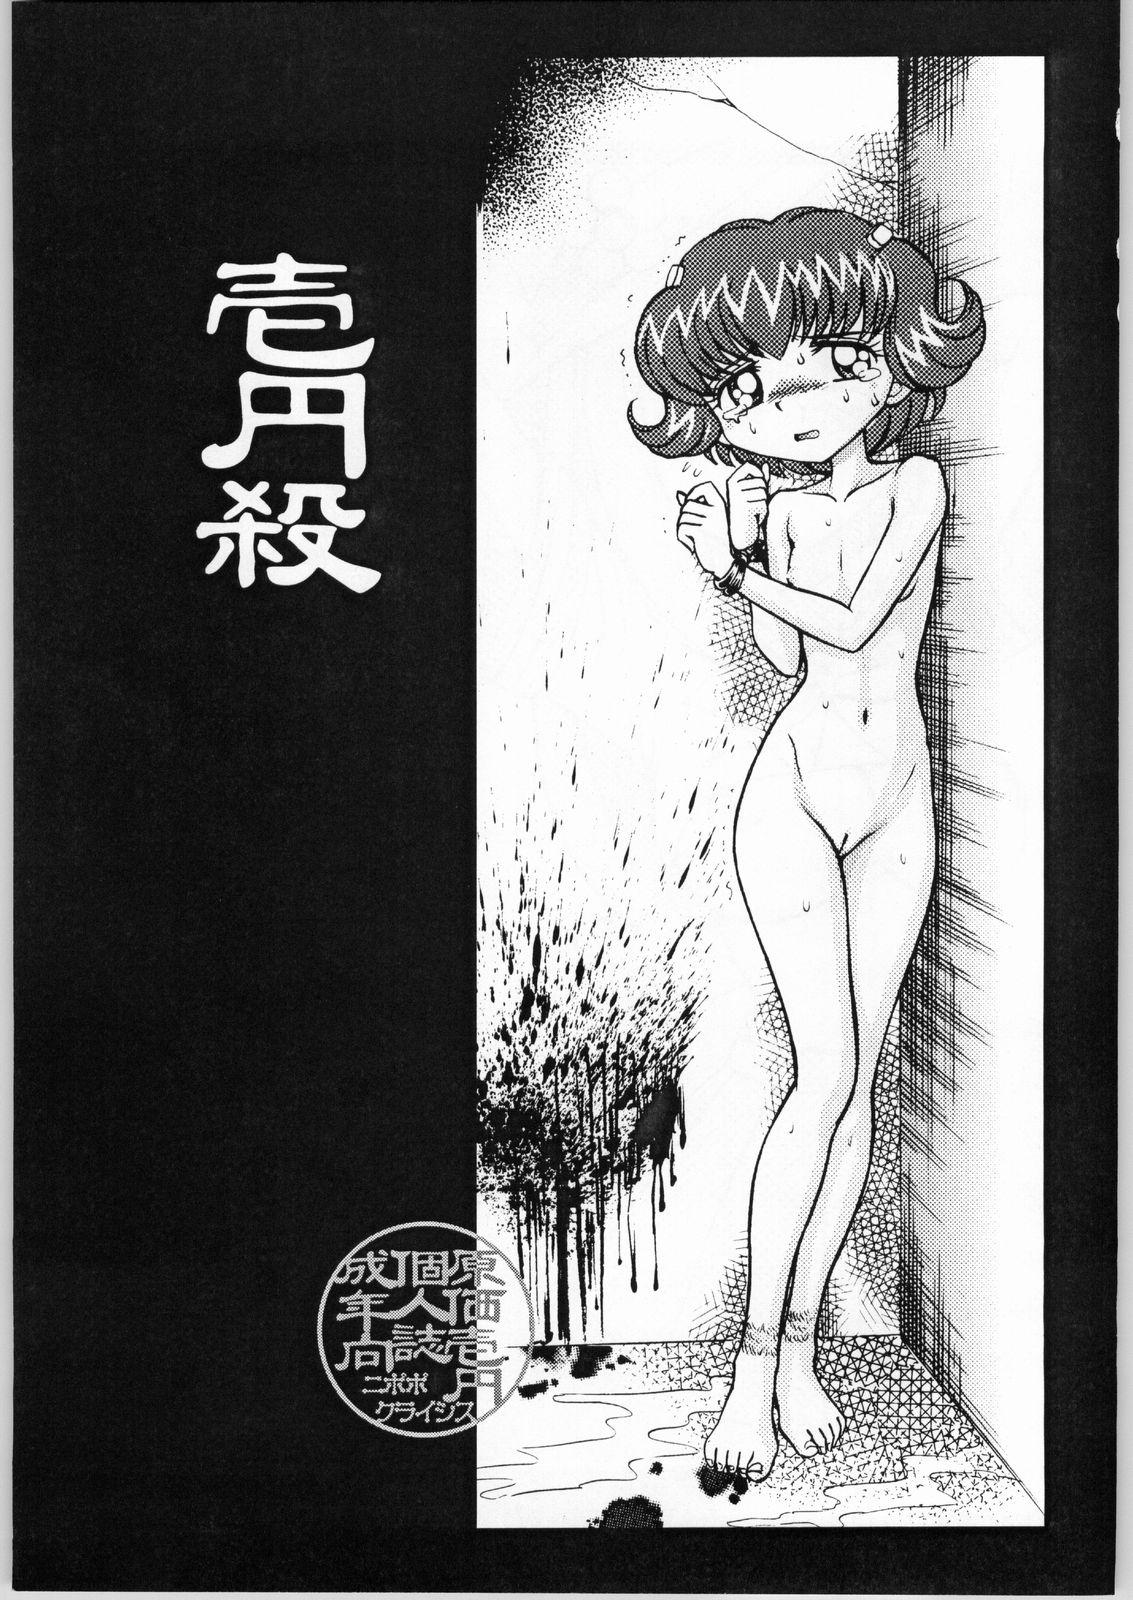 Blowjob Porn Ichien Satsu - Ojamajo doremi Tenchi muyo Martian successor nadesico Turn a gundam Hand maid may Medabots Hamtaro Flaca - Page 2